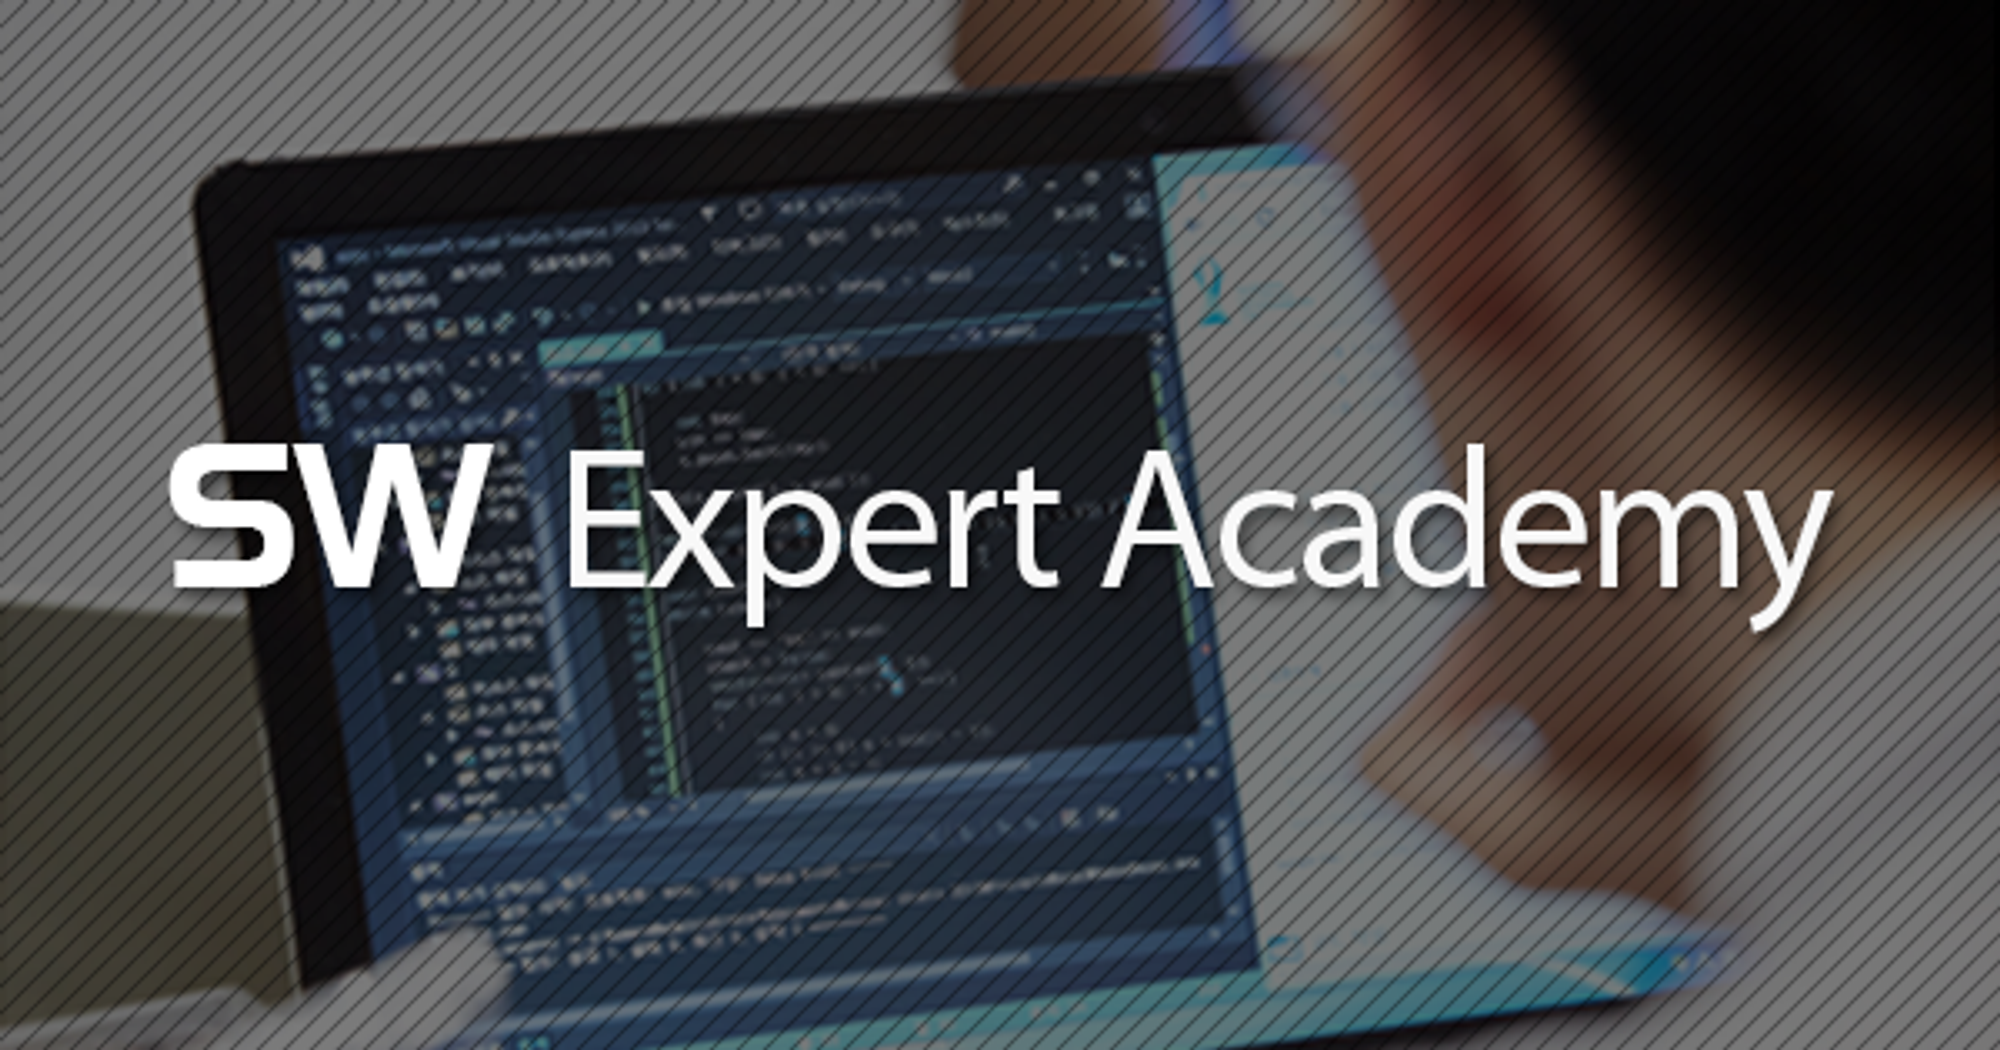 SW Expert Academy